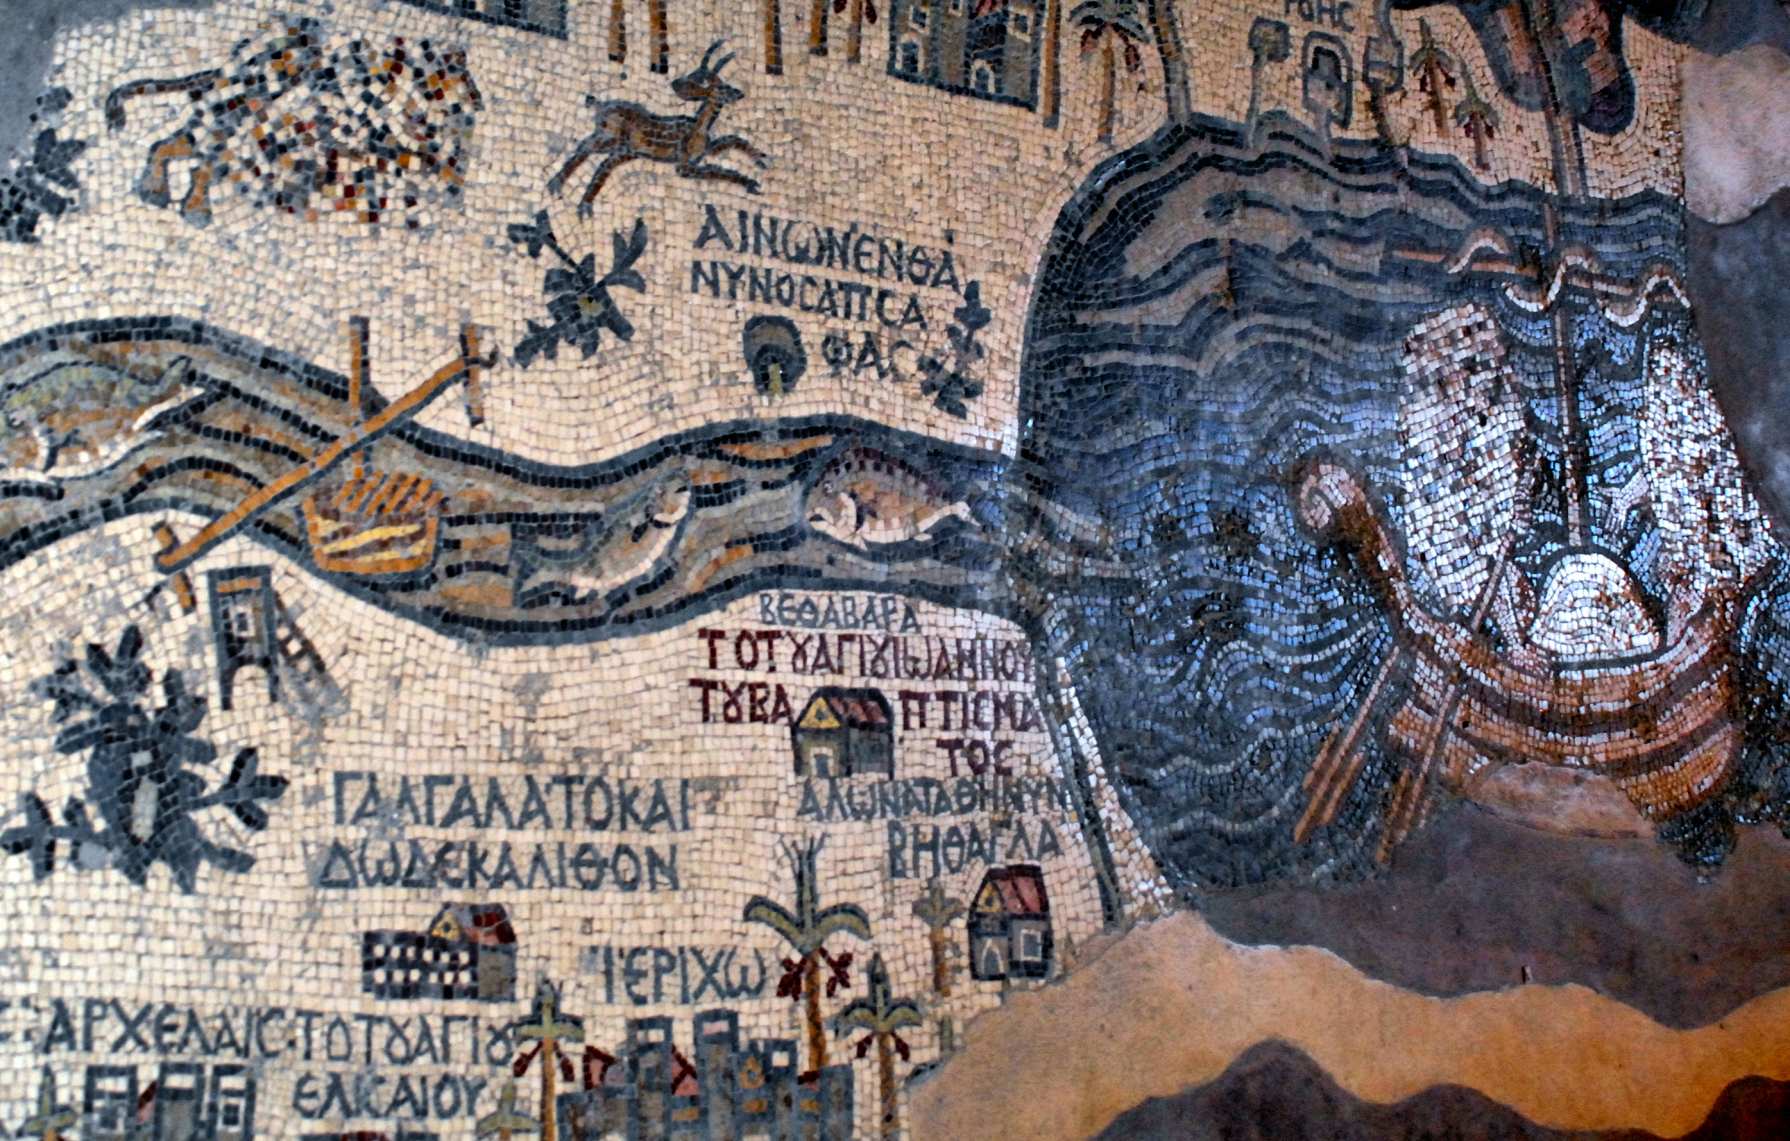 Madaba Mosaic Map 